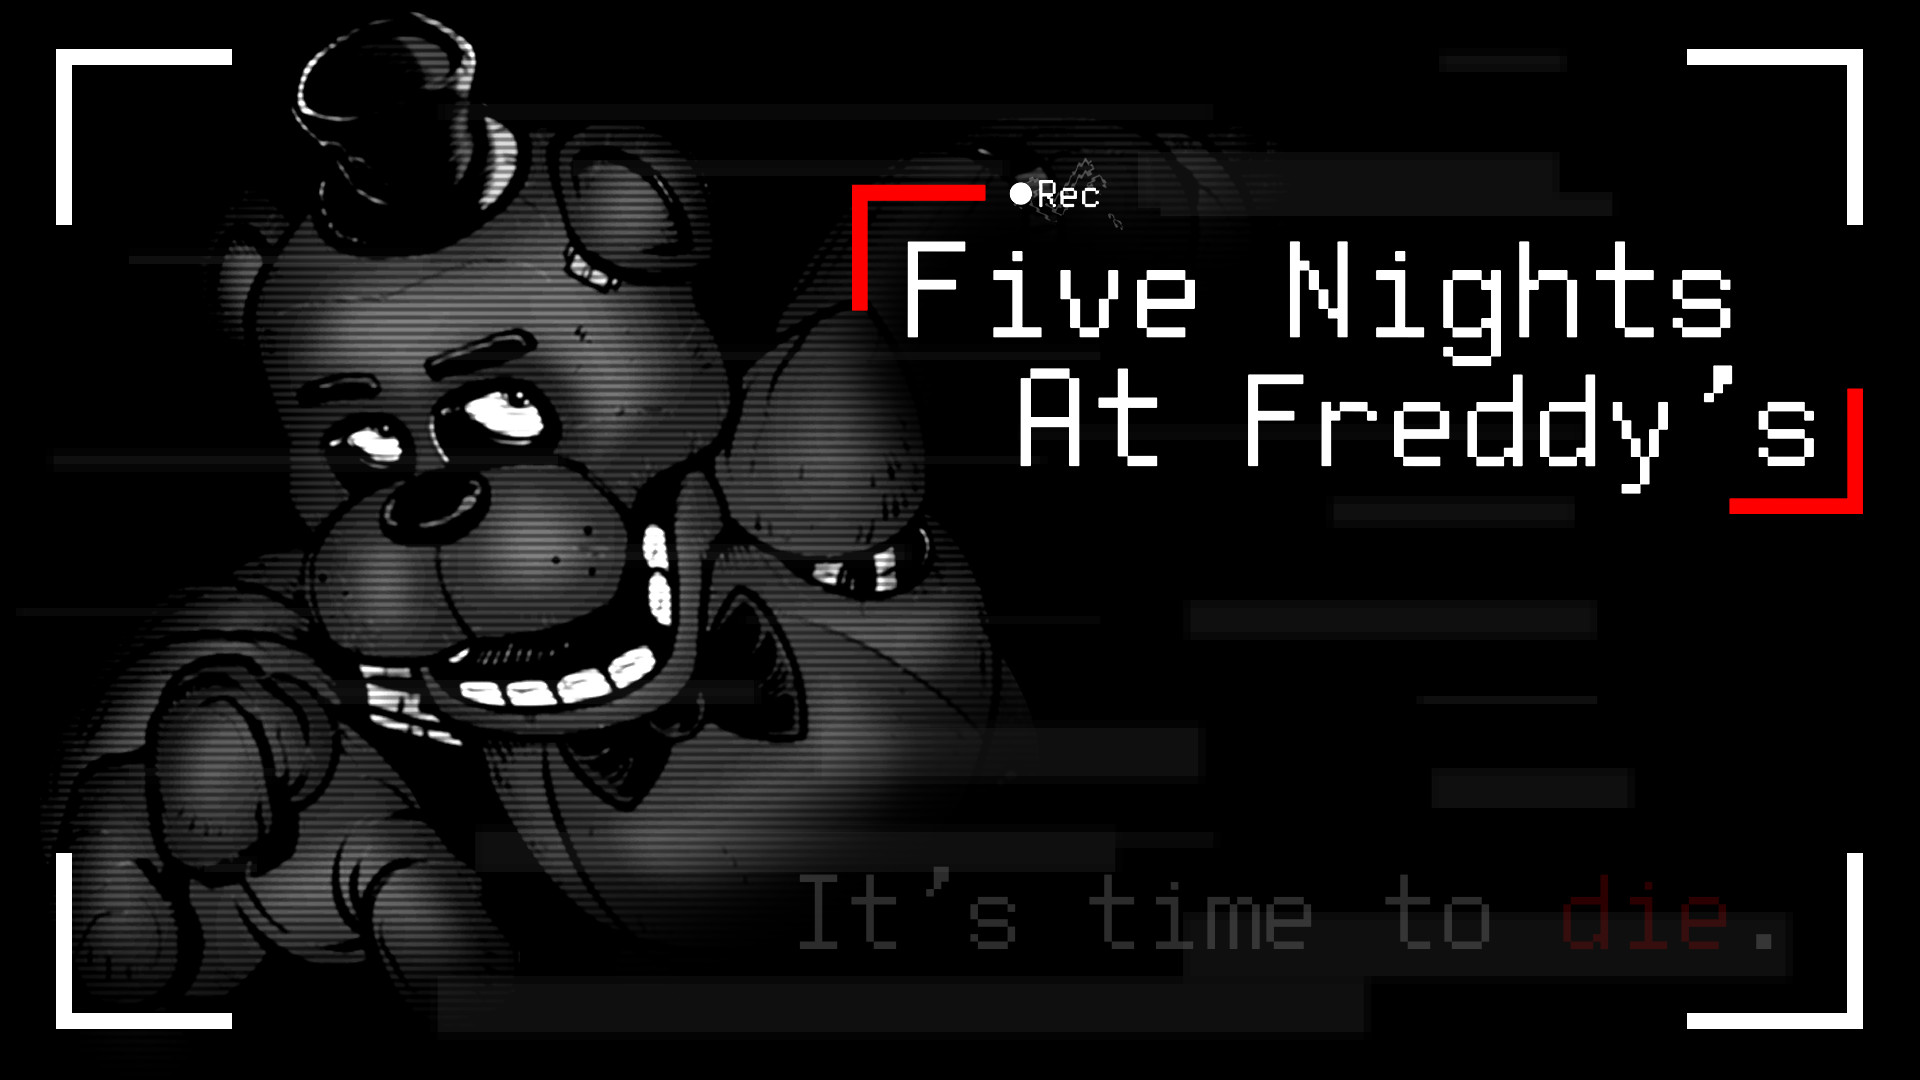 Five Nights at Freddy's wallpaper dump